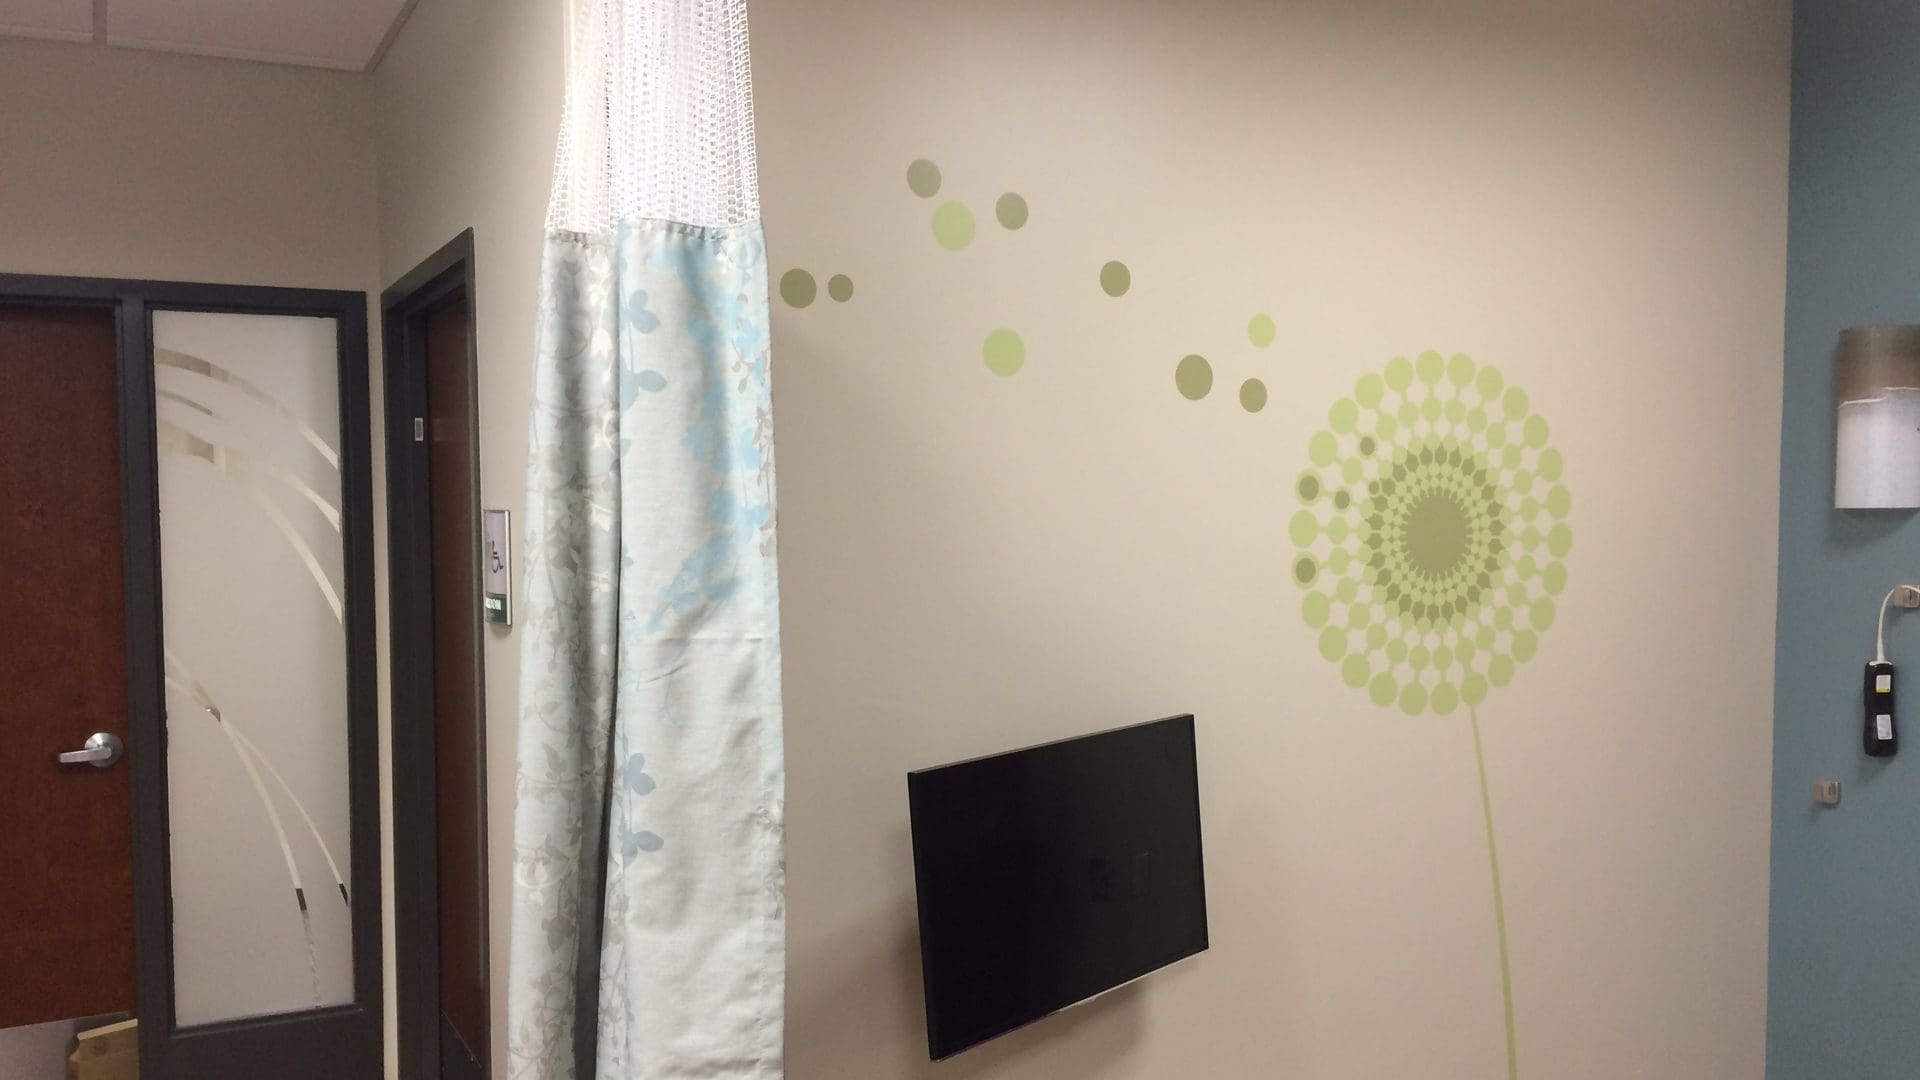 Sparrow Hospital – Dandelion Wall Graphics